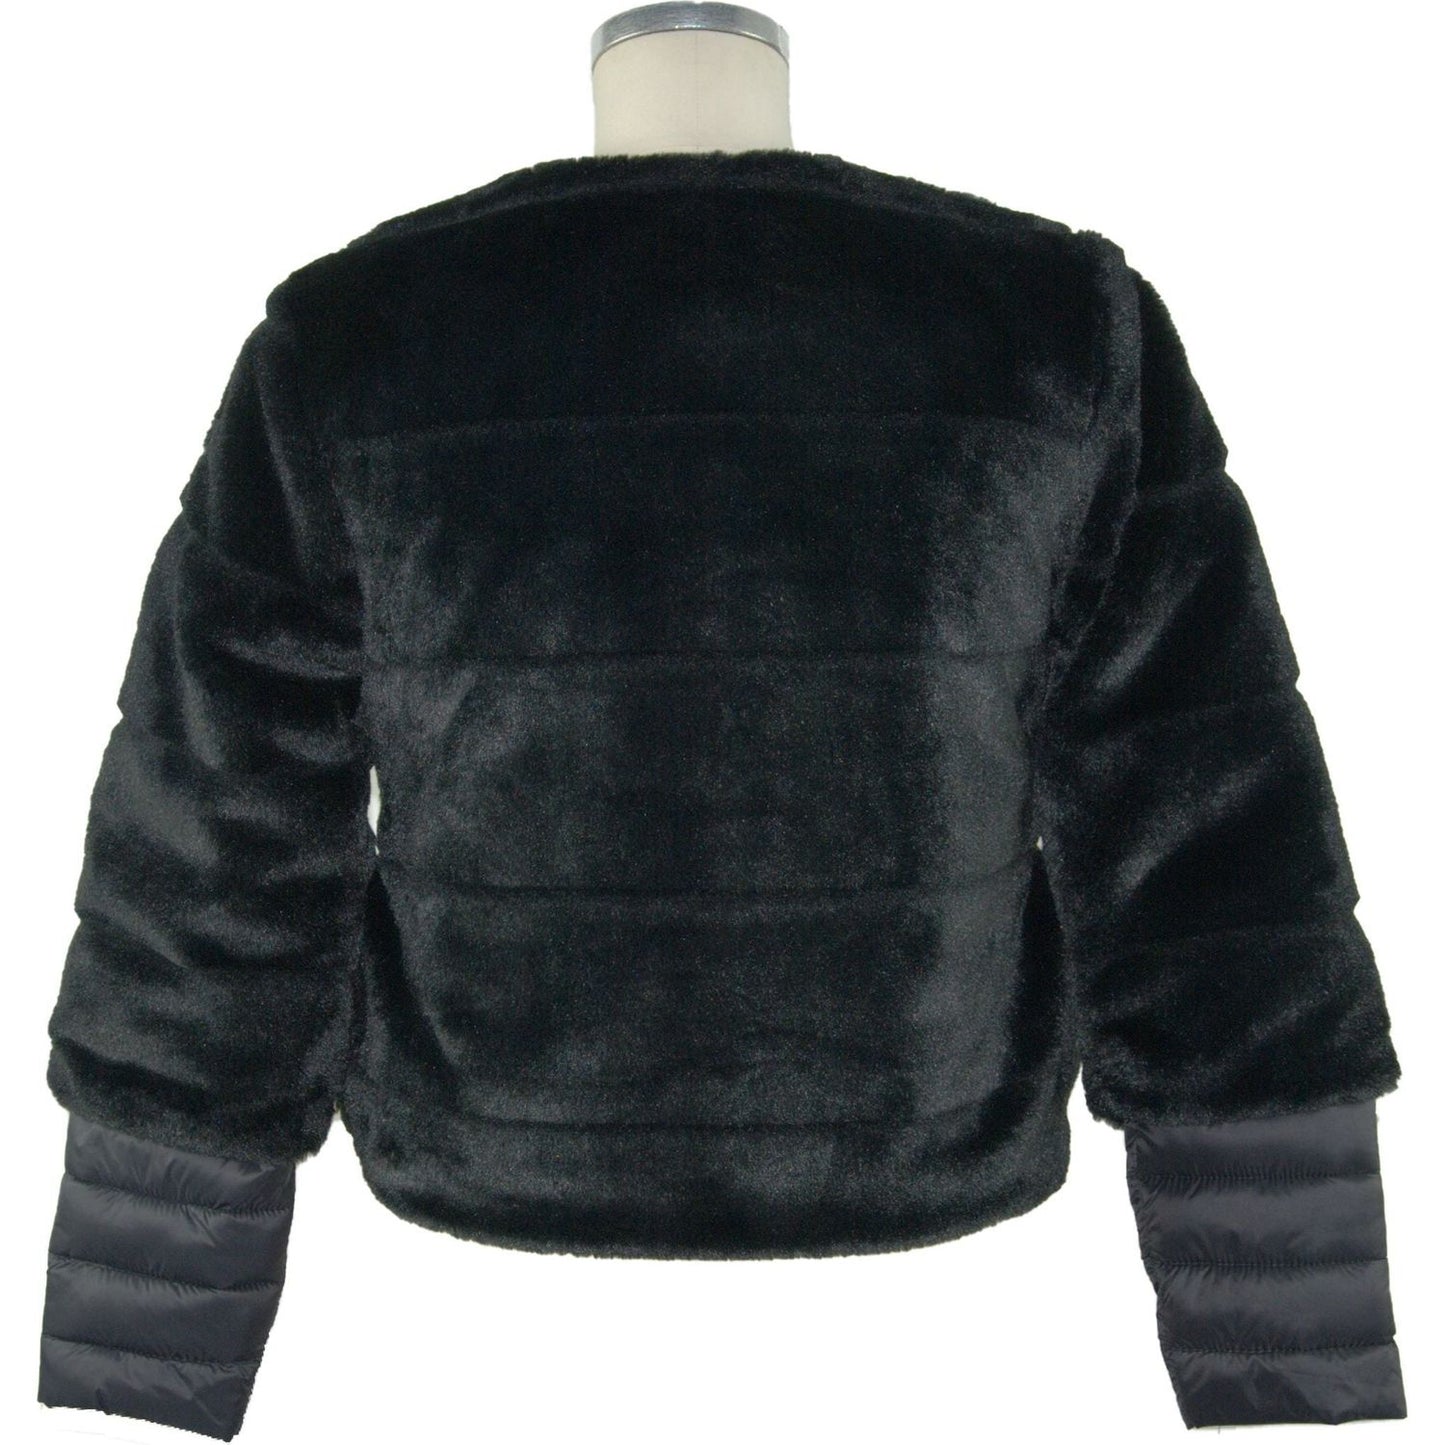 Maison Espin Elegant Black Faux Fur Outerwear black-polyester-jackets-coat-3 WOMAN COATS & JACKETS stock_product_image_1641_924458796-3-6caee225-2bd.jpg